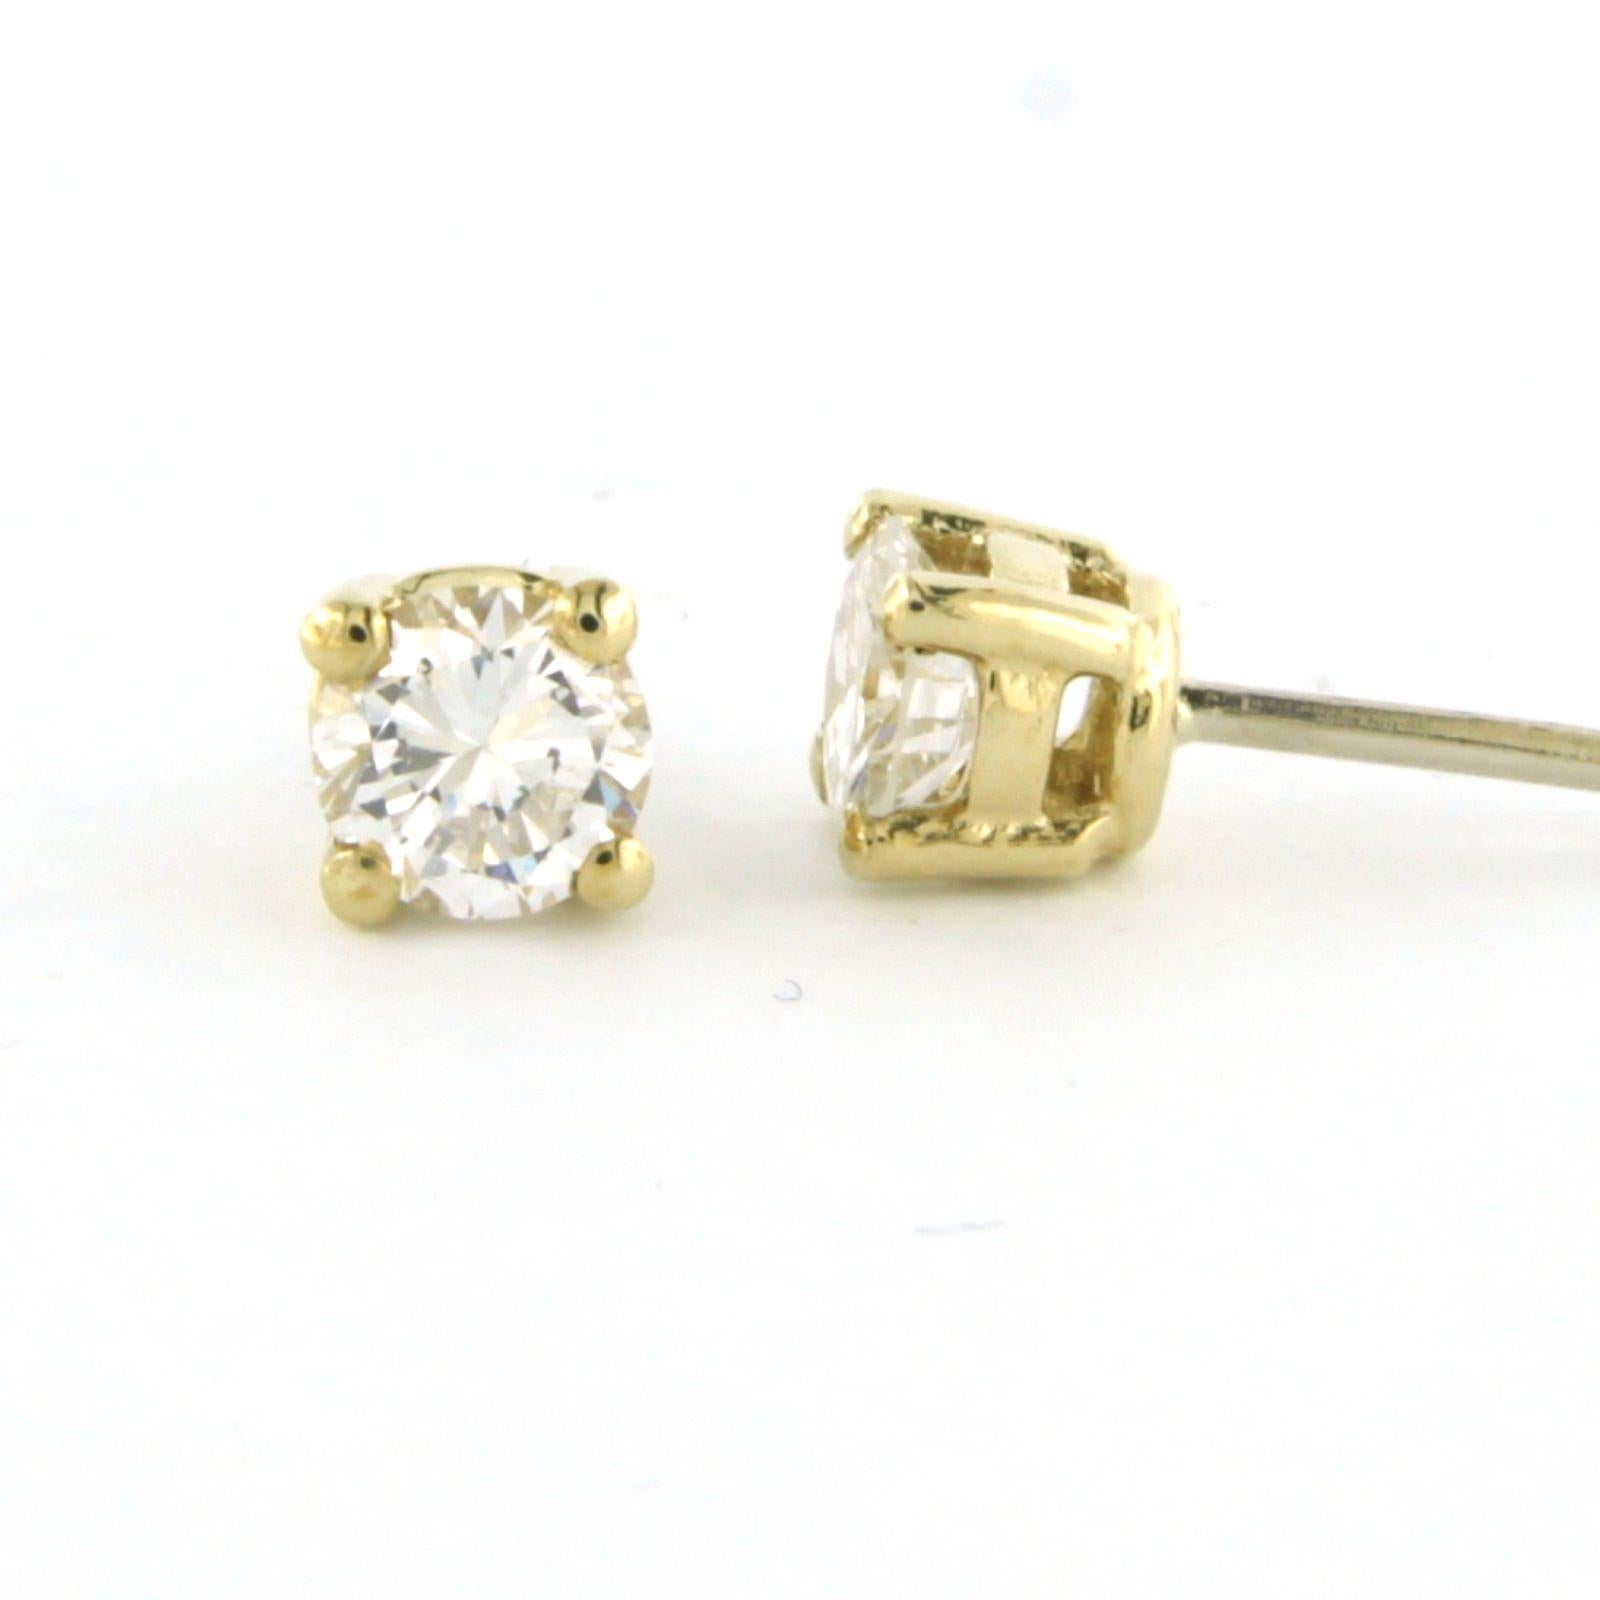 Modern Earrings studs set with diamonds 14k yellow gold